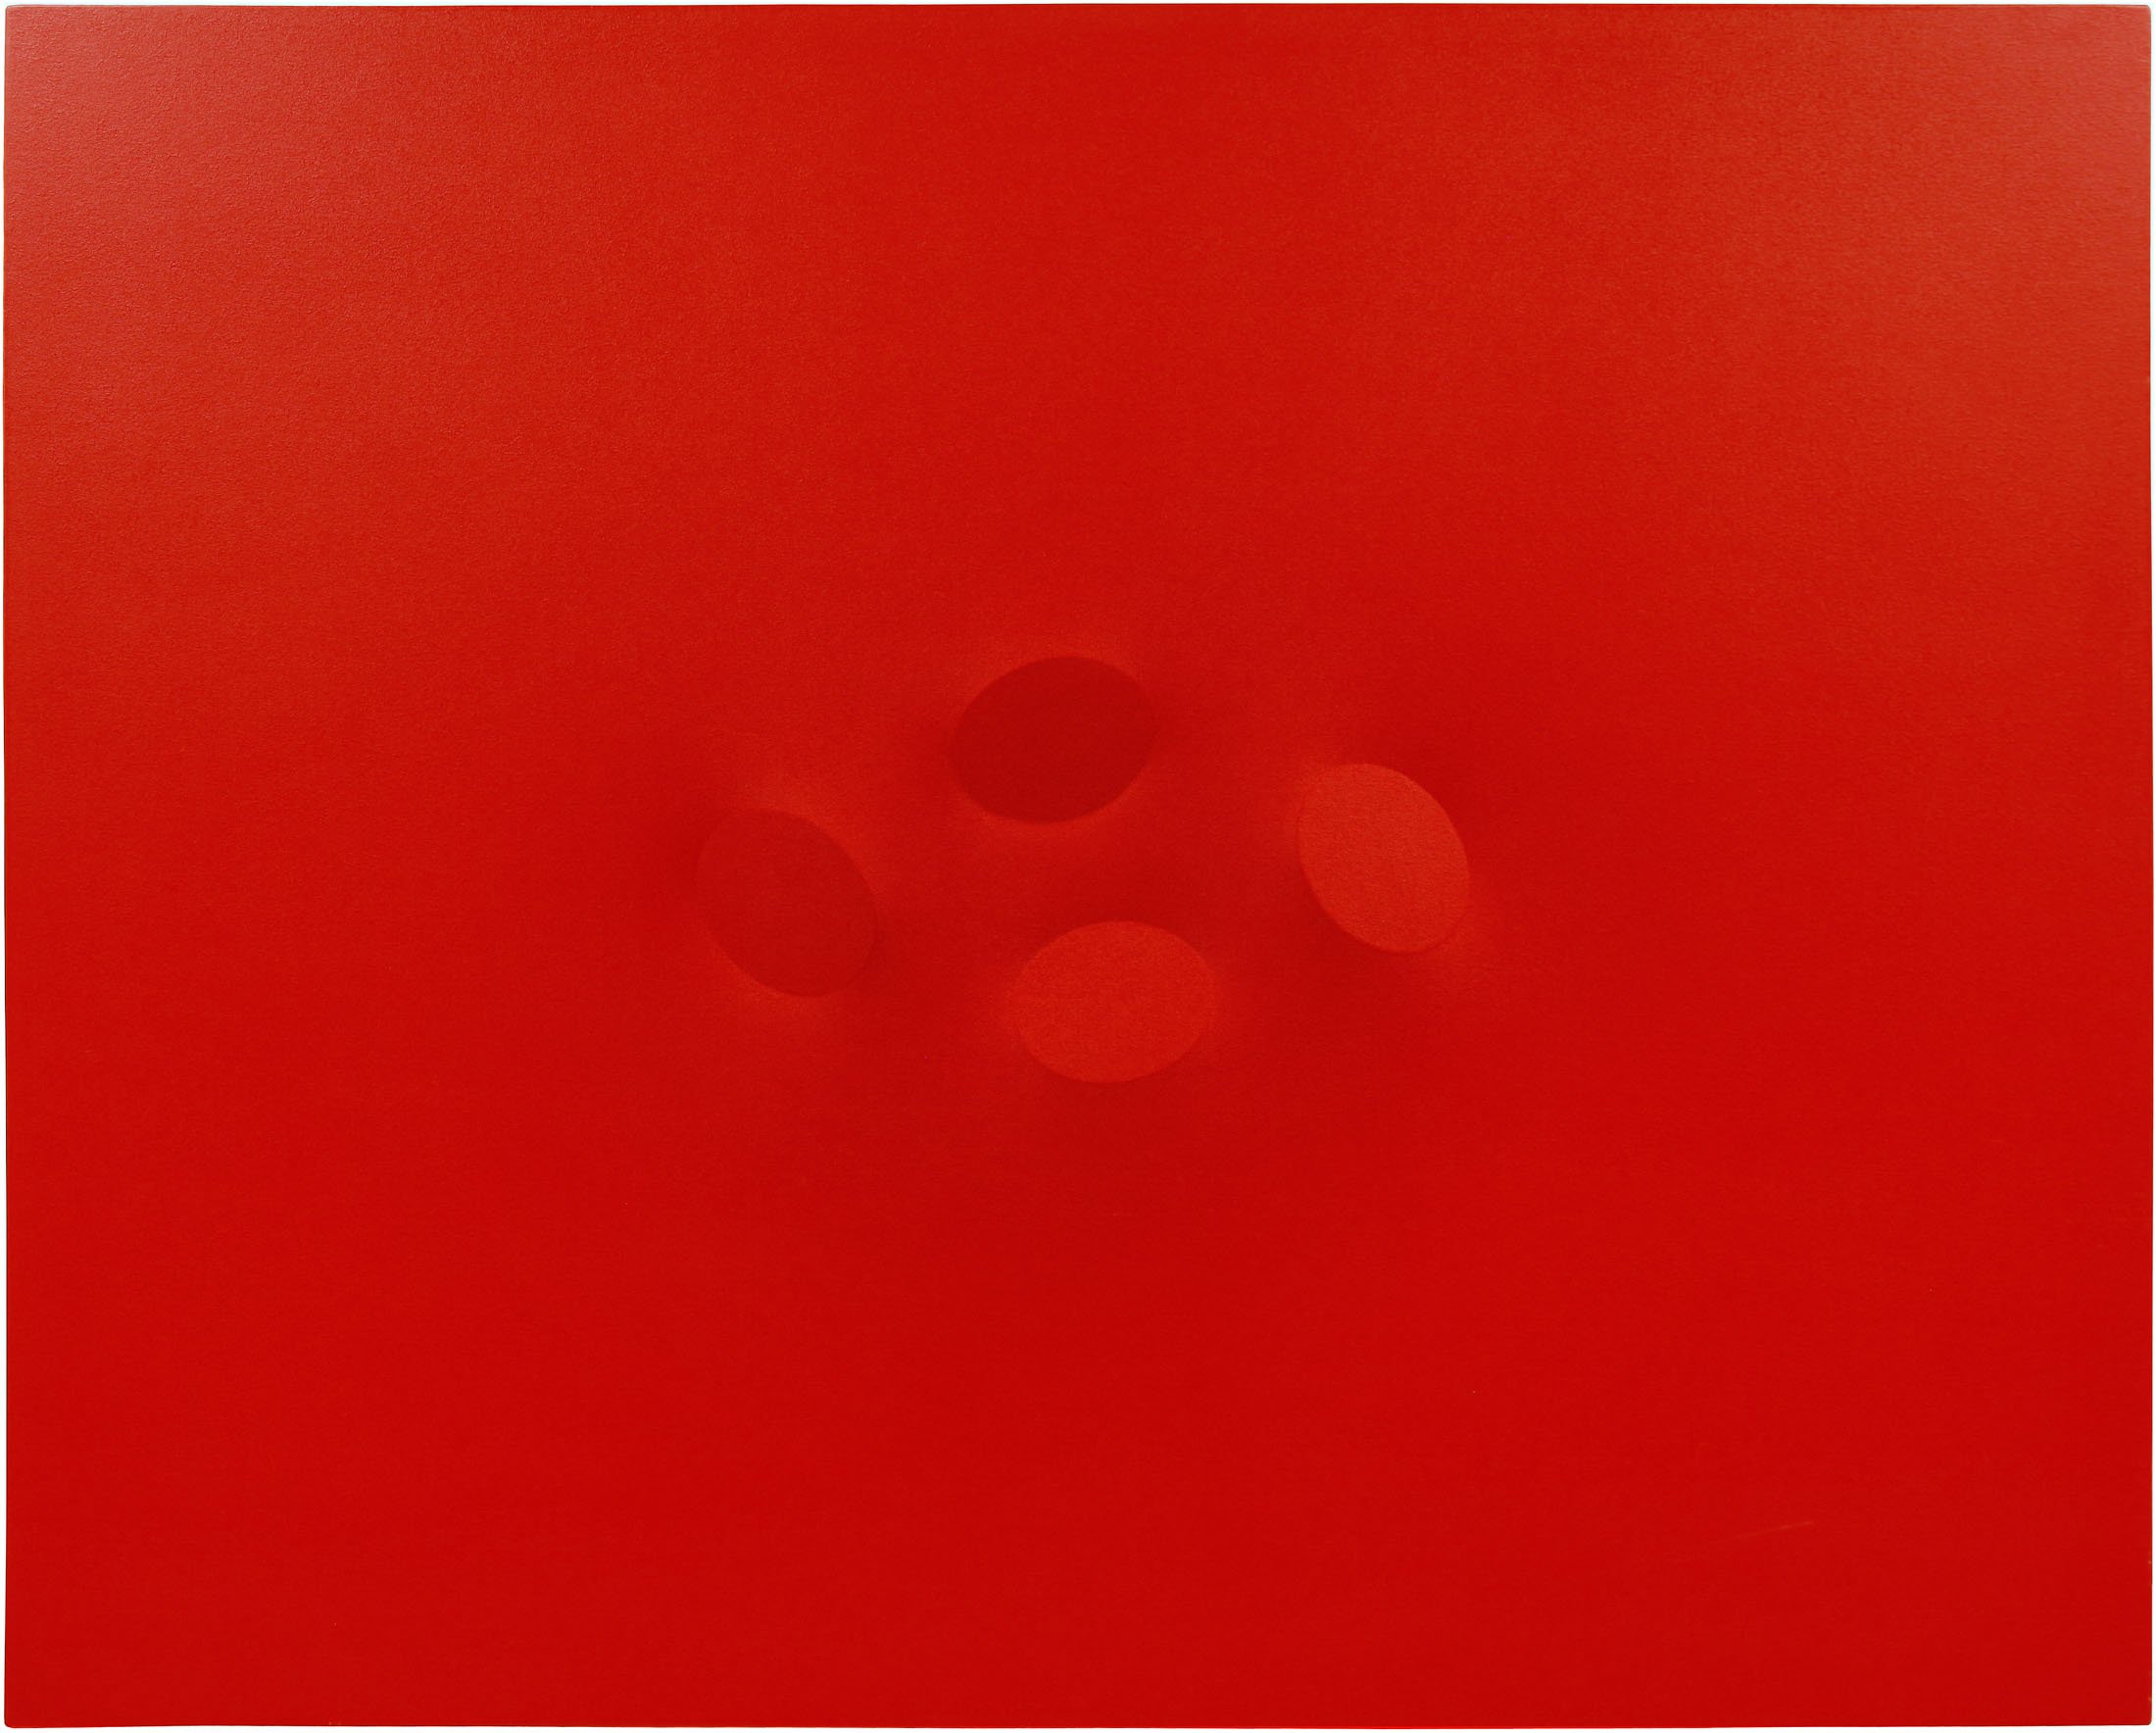 Turi Simeti, 4 ovali rossi, 2010, 120x150 cm. Courtesy Archivio Turi Simeti